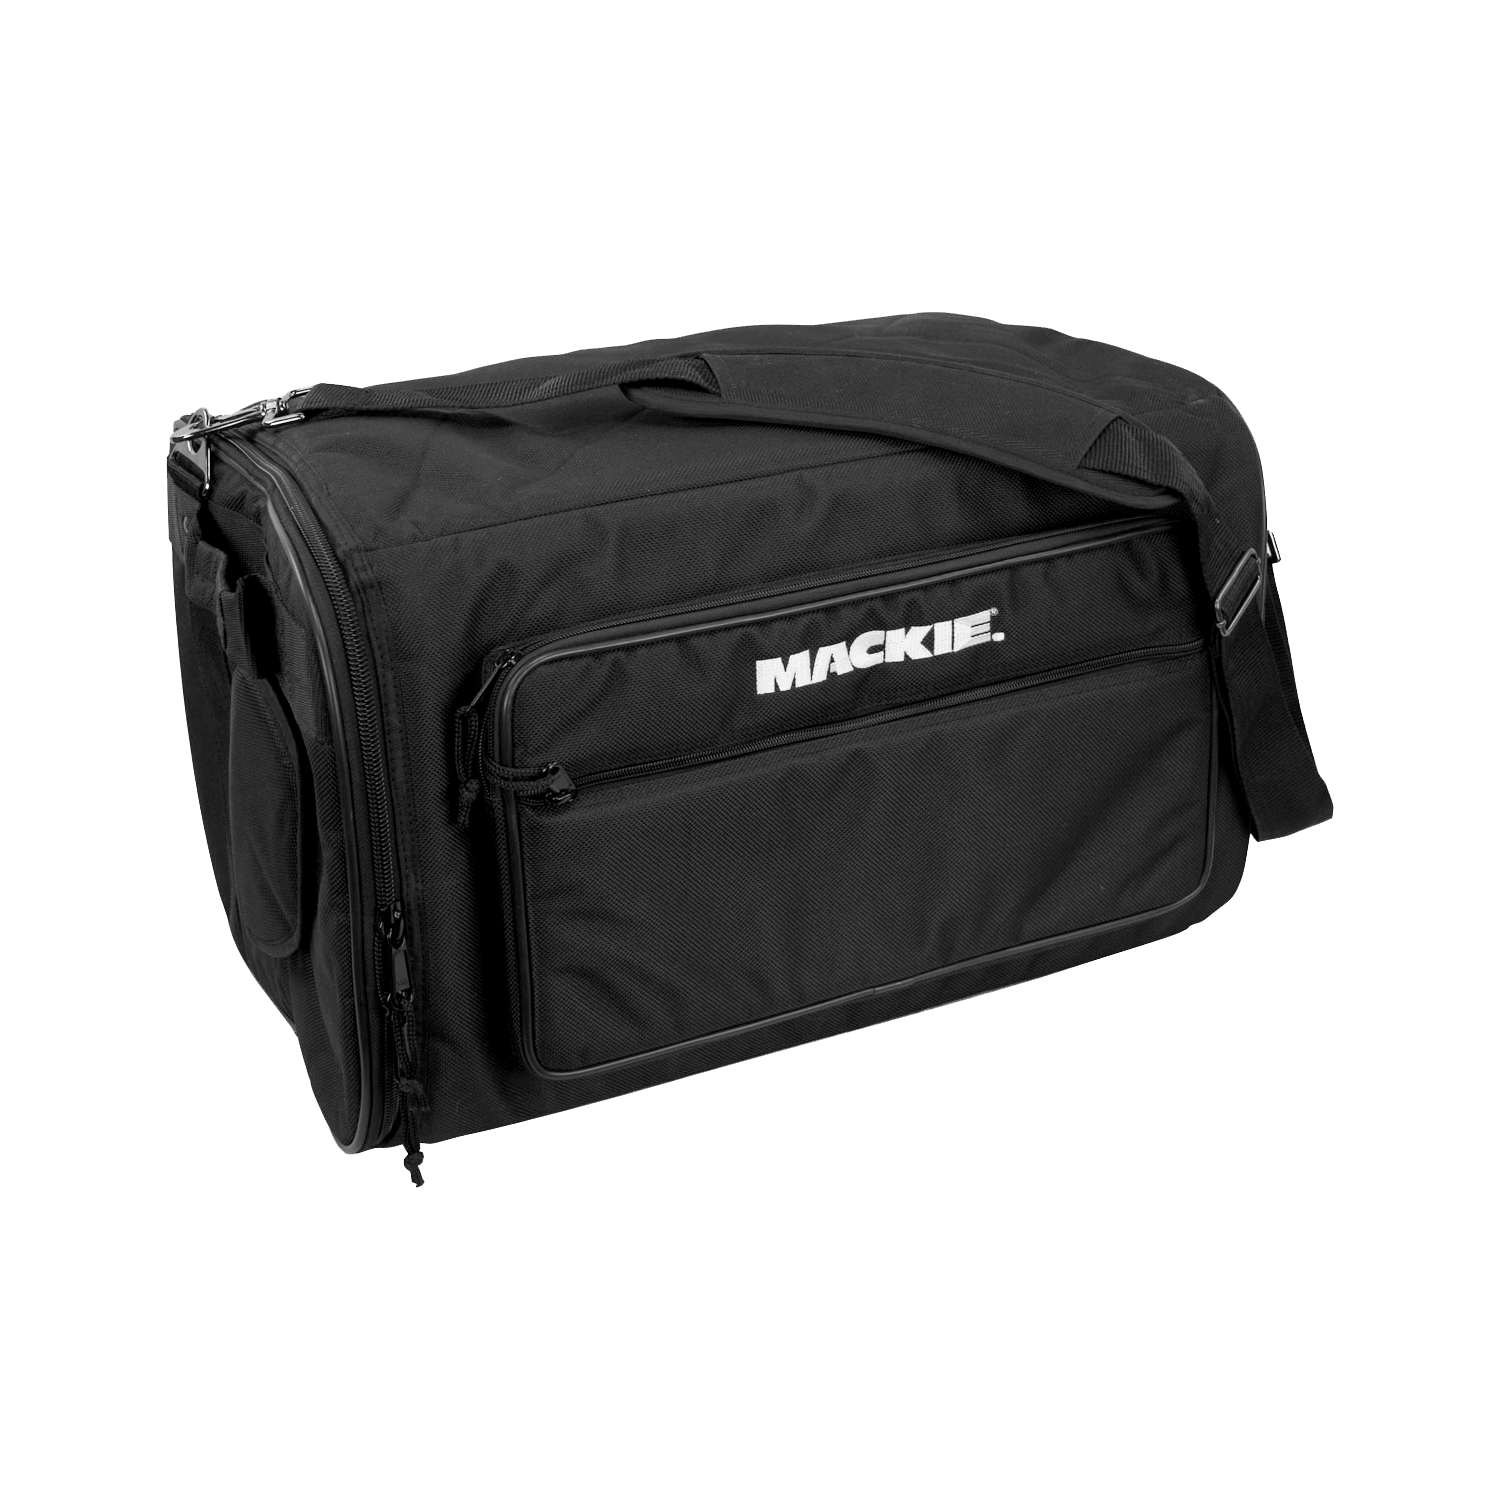 Mackie PPM608 / PPM1008 Mixer Bag